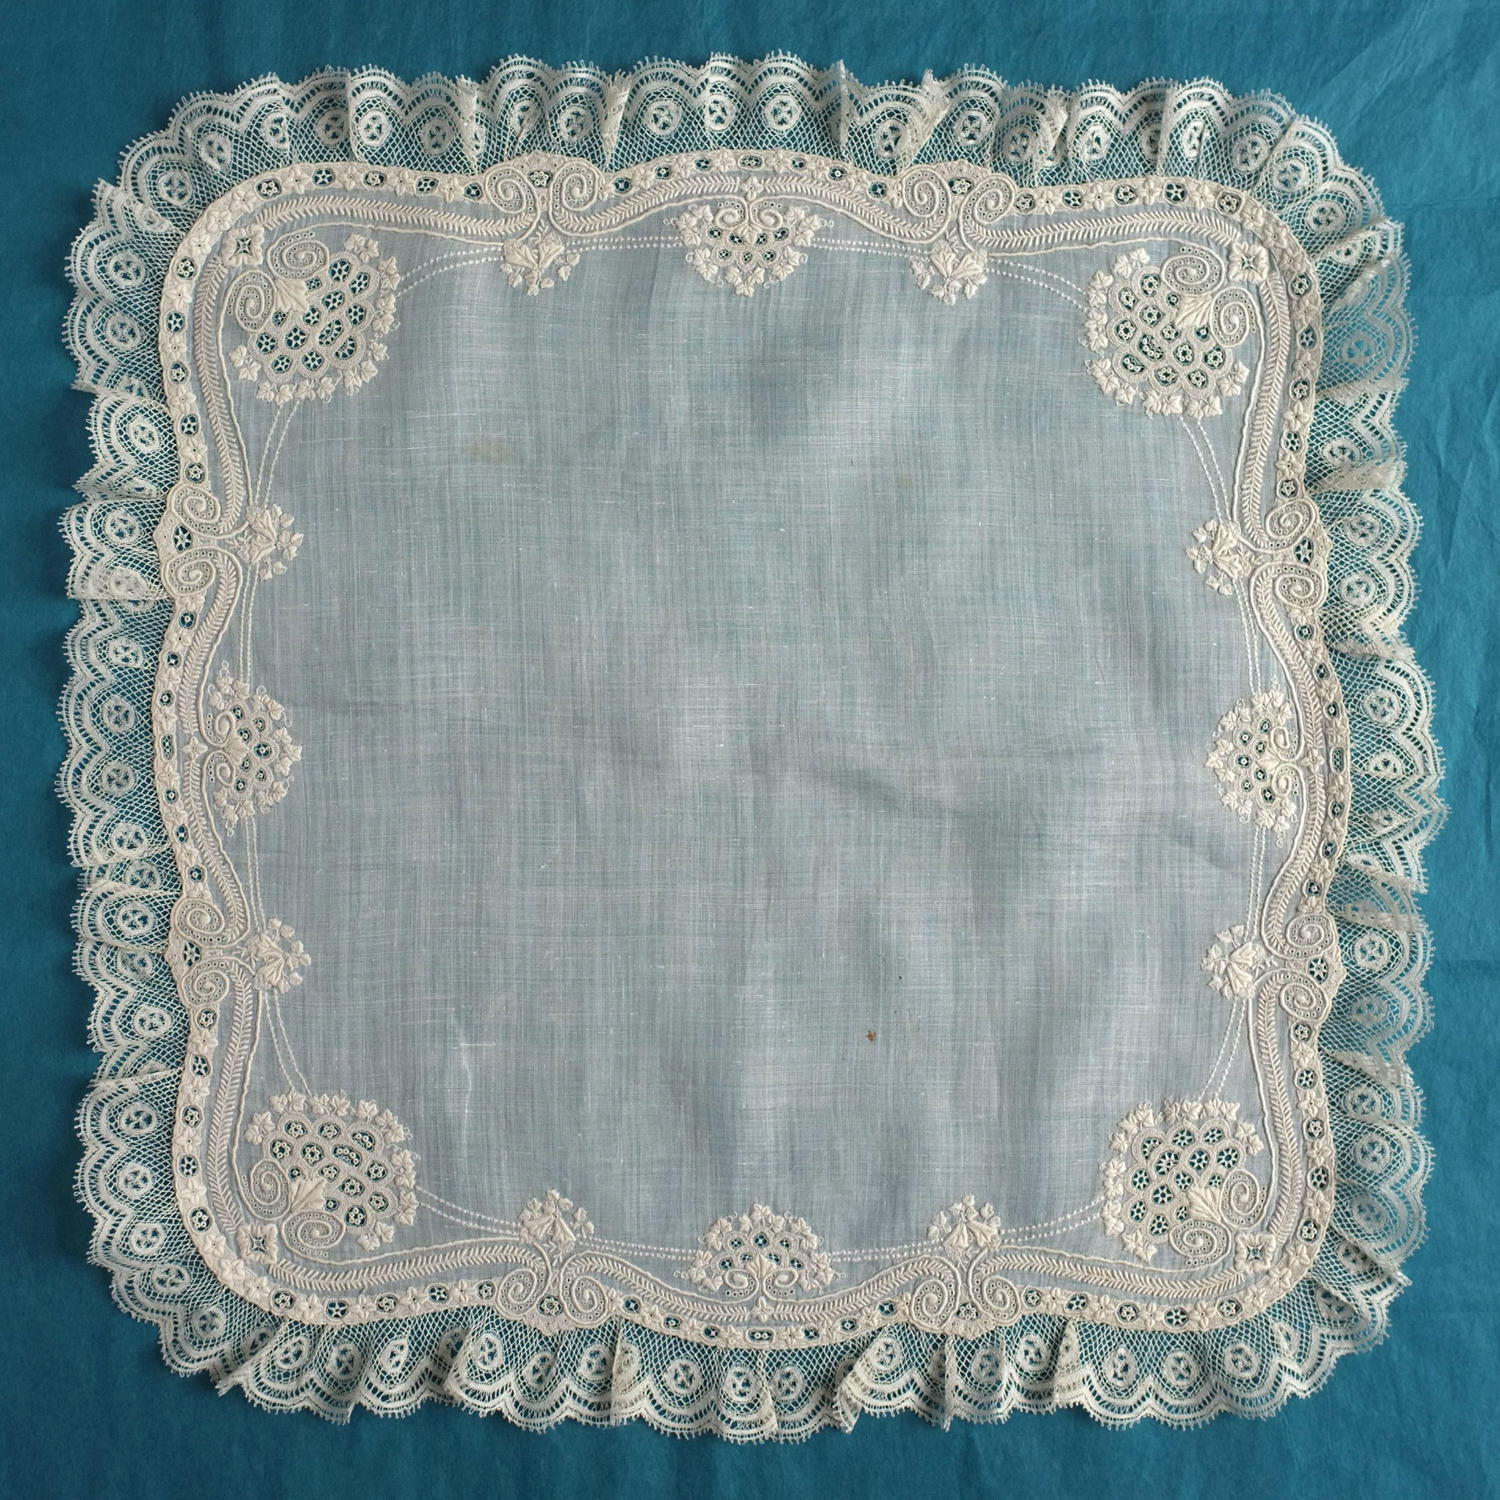 Art Nouveau Style Whitework Handkerchief with Valenciennes Lace Border